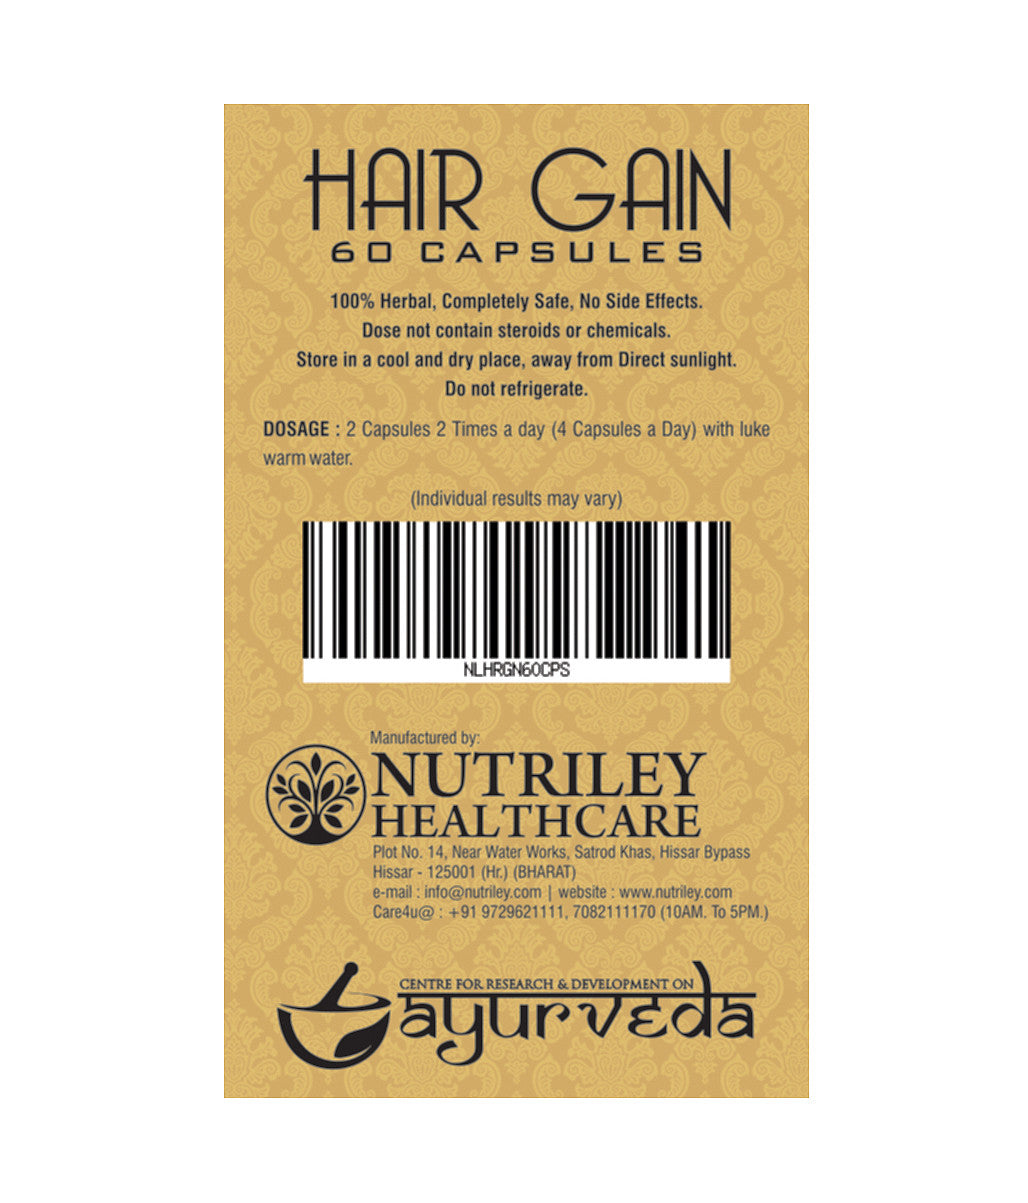 Nutriley Hair Gain - Hair Regeneration Capsules (60 Capsules)